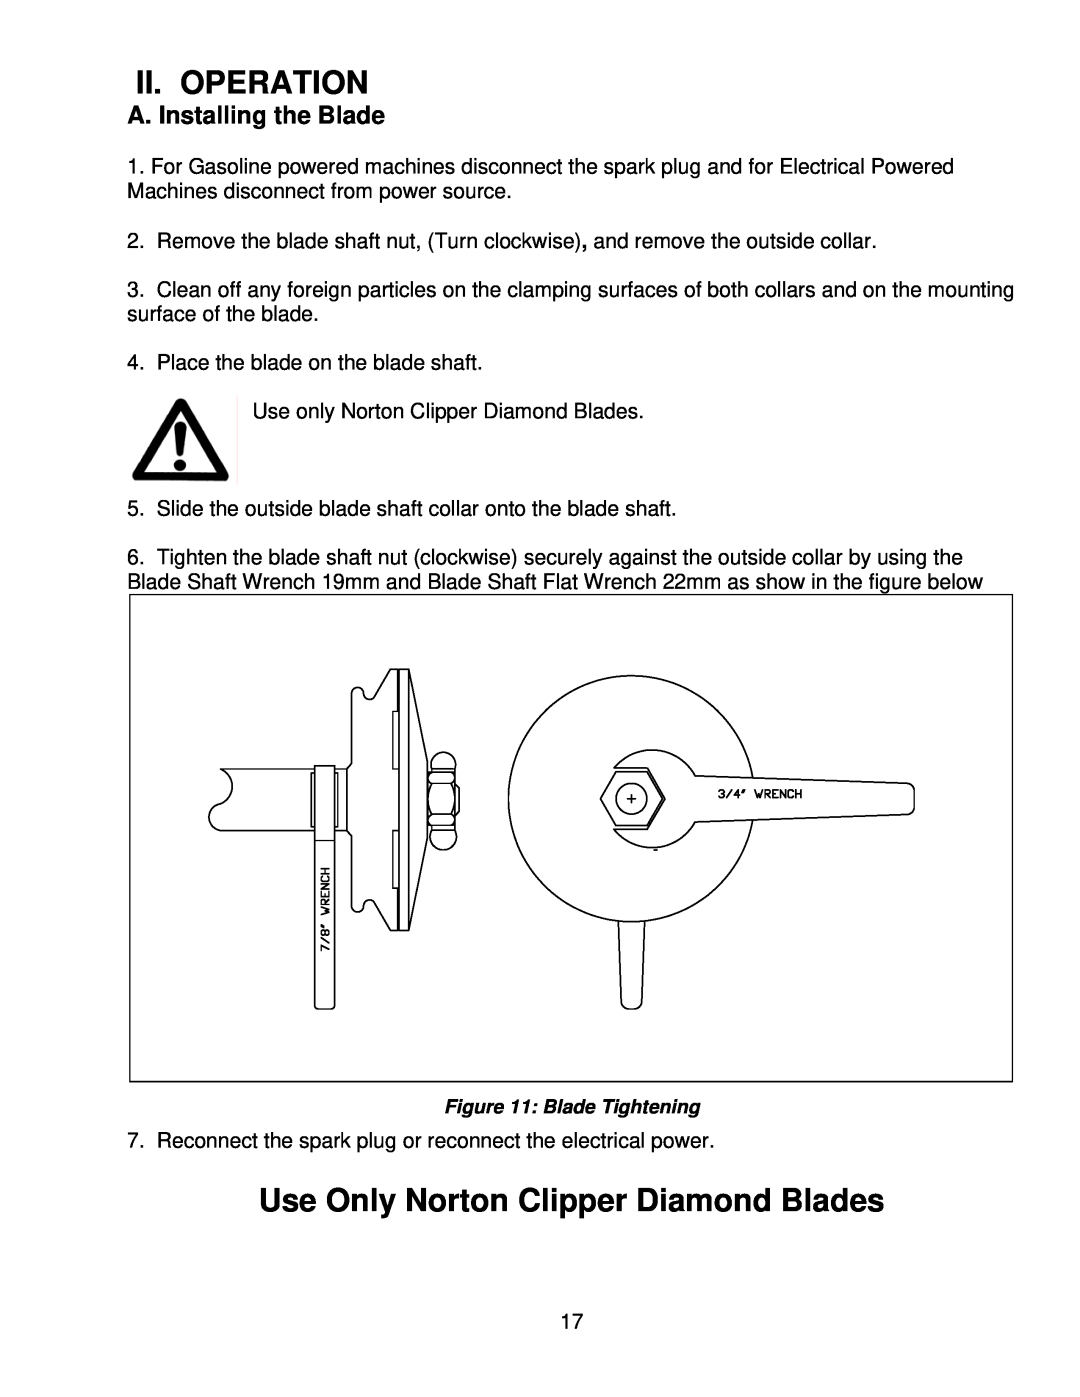 Norton Abrasives BBC207, BBC157, BBC547 Ii. Operation, Use Only Norton Clipper Diamond Blades, A. Installing the Blade 